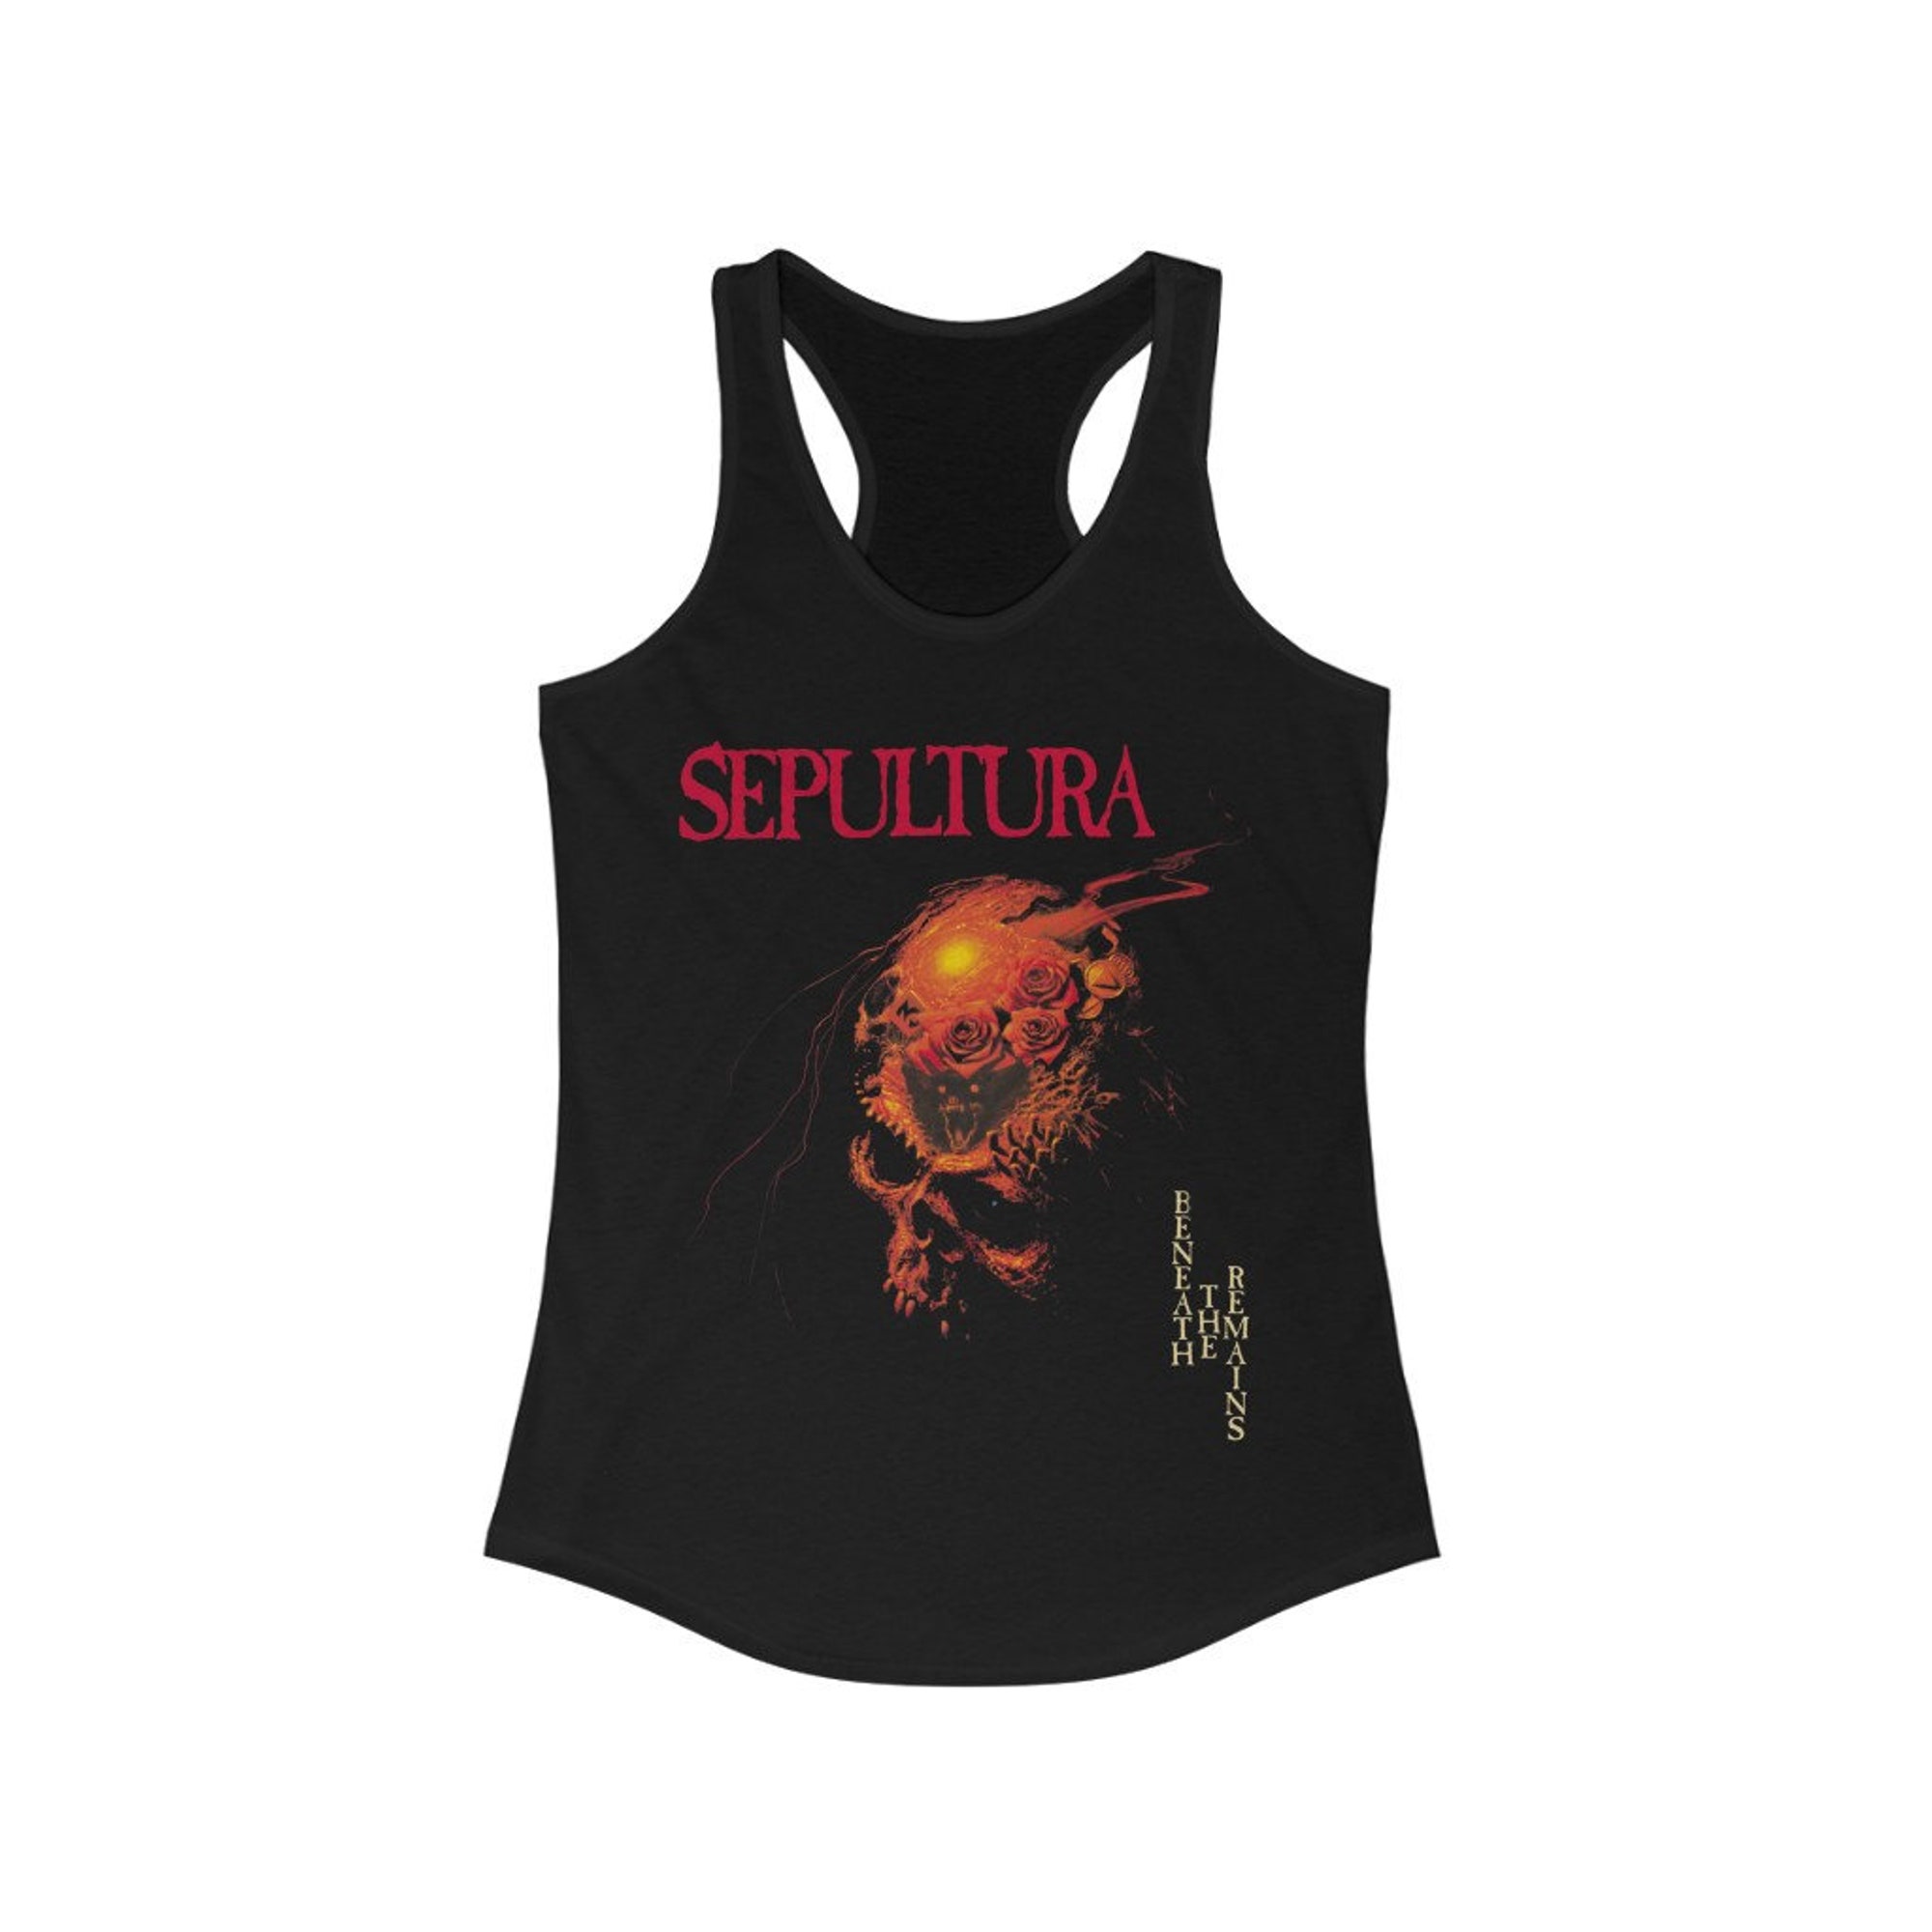 Sepultura Womens tank tee - Beneath The Remains Sleeveless Top - Heavy Metal Band